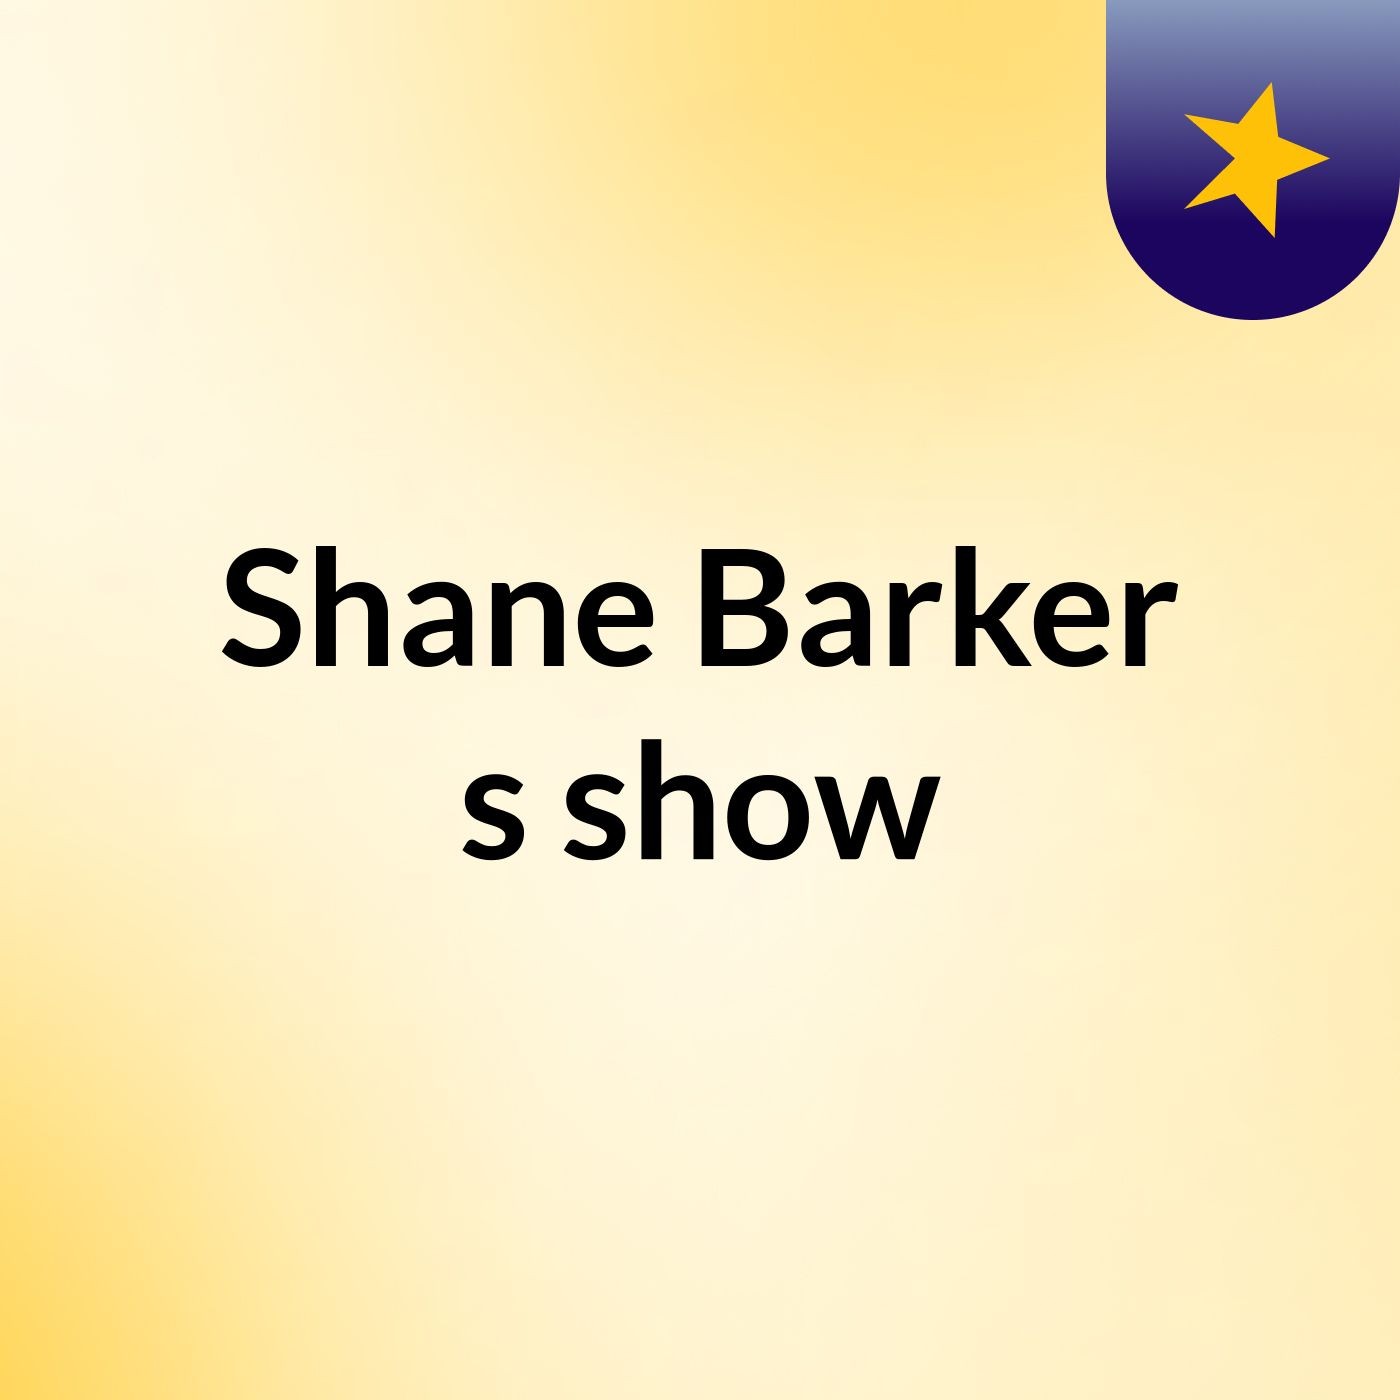 Shane Barker's show